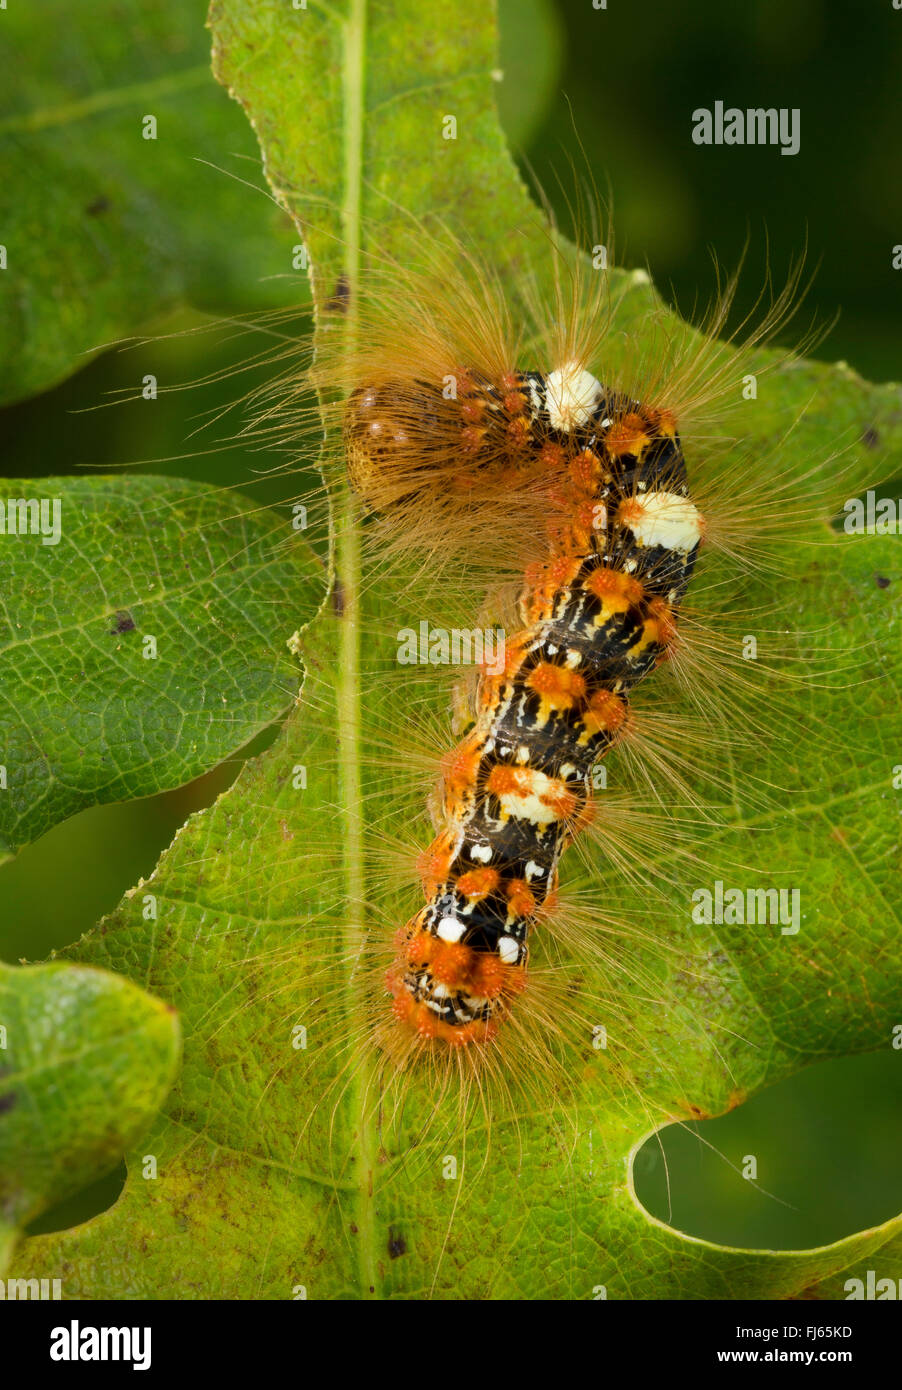 Scarce Merveille du jour (Moma alpium, Daseoacheta alpium, Diphthera alpium), caterpillar with hairs eating at an oak leaf, Germany Stock Photo